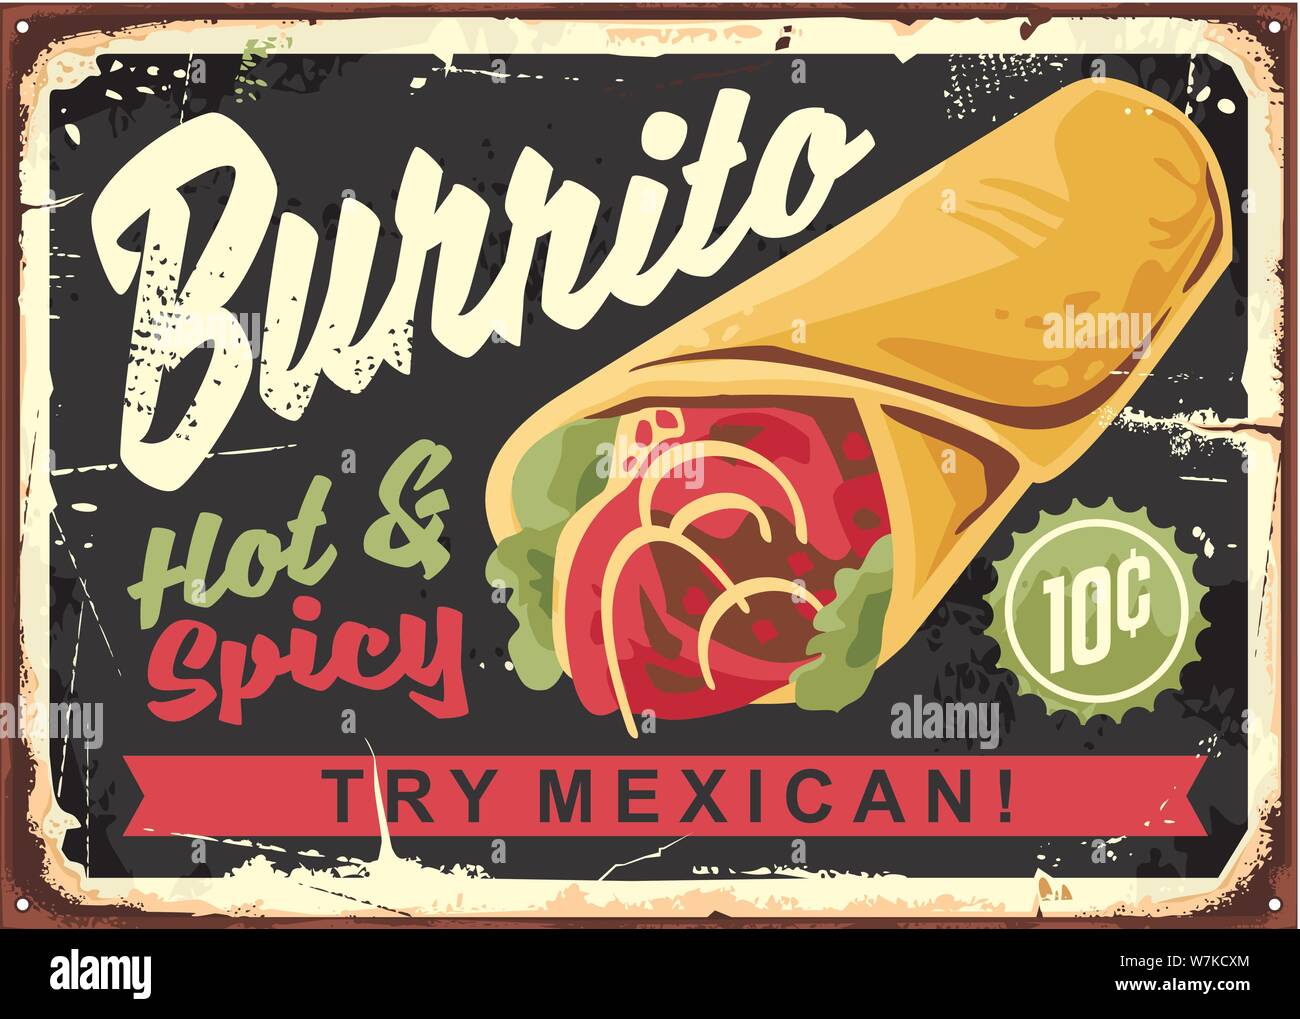 Burrito vintage restaurant sign. Mexican food retro advertising. Vector graphic illustration. Stock Vector